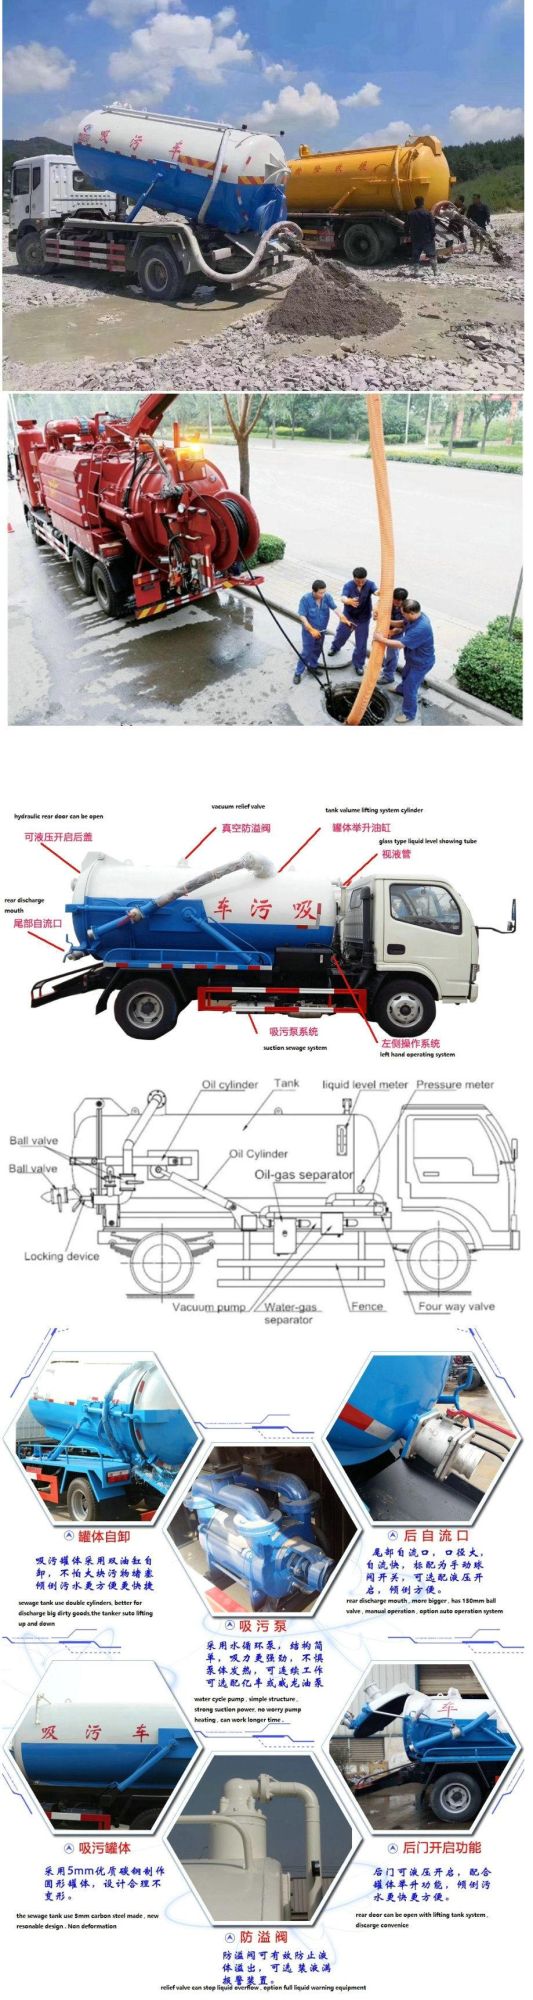 I-S-U-Z-U Vacuum Truck Cesspit Emptier -10000 Liters (Septic Tank) Rwanda